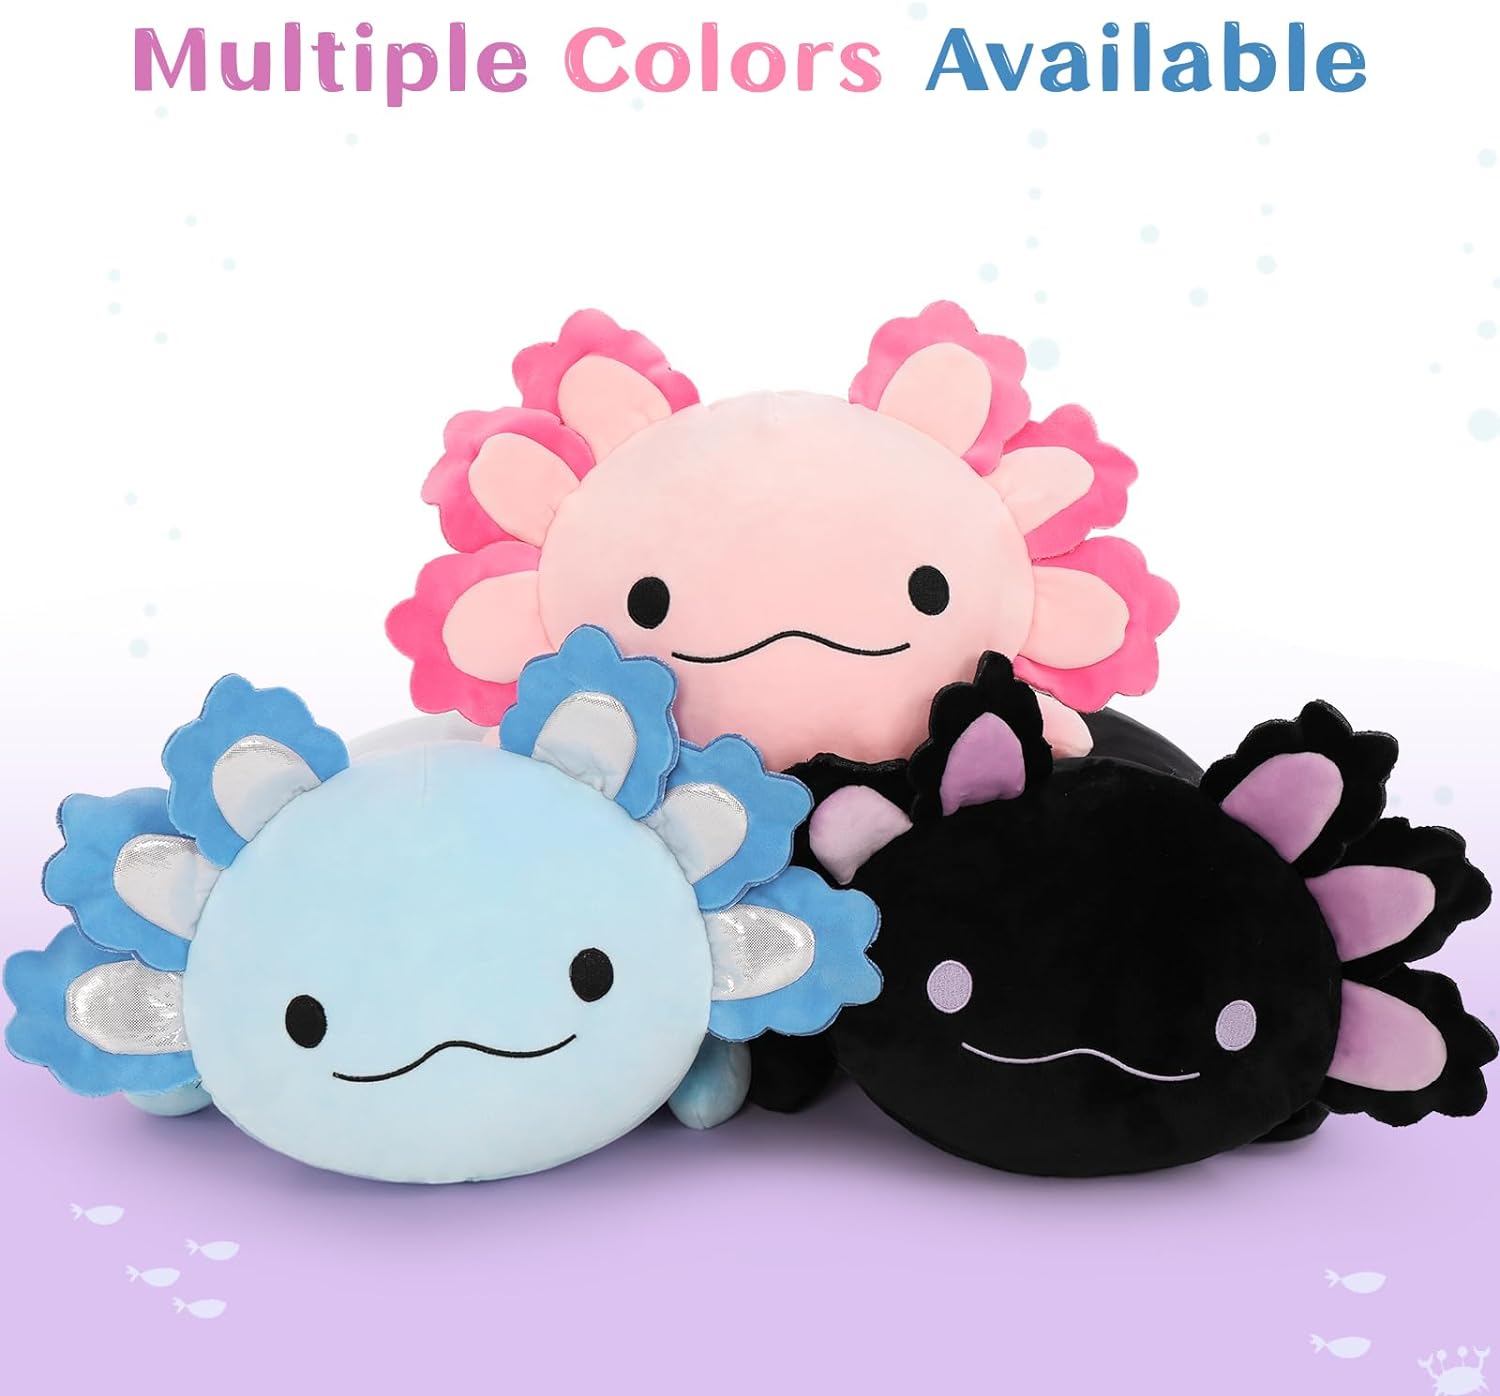 Axolotl Plush Toys, Pink/Blue/Black, 23.5 Inches